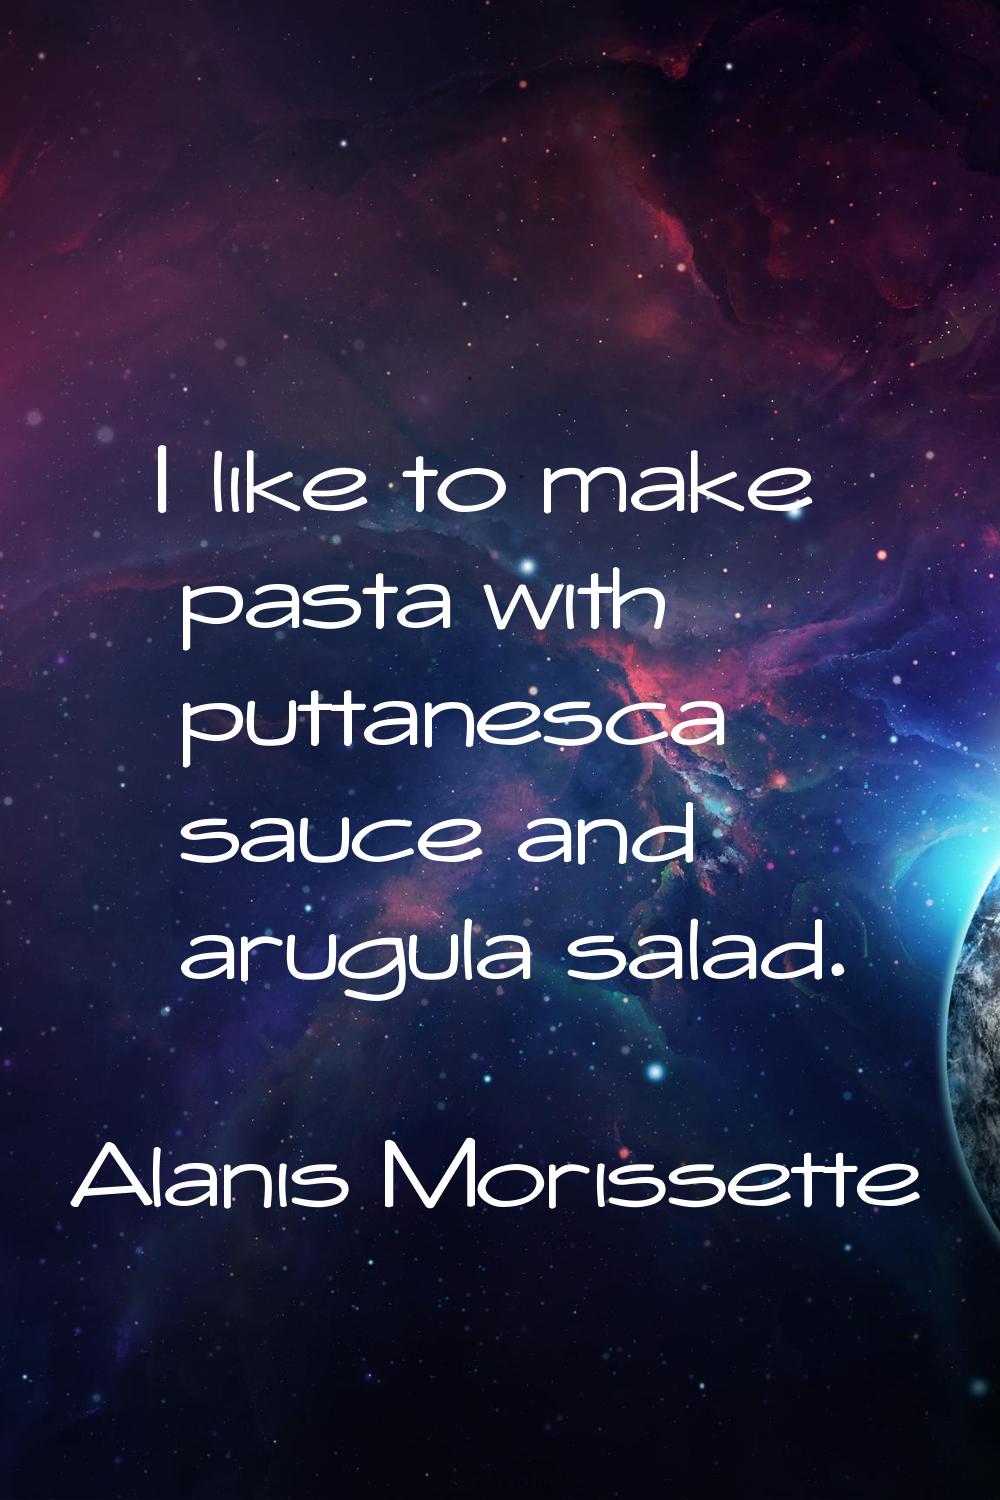 I like to make pasta with puttanesca sauce and arugula salad.